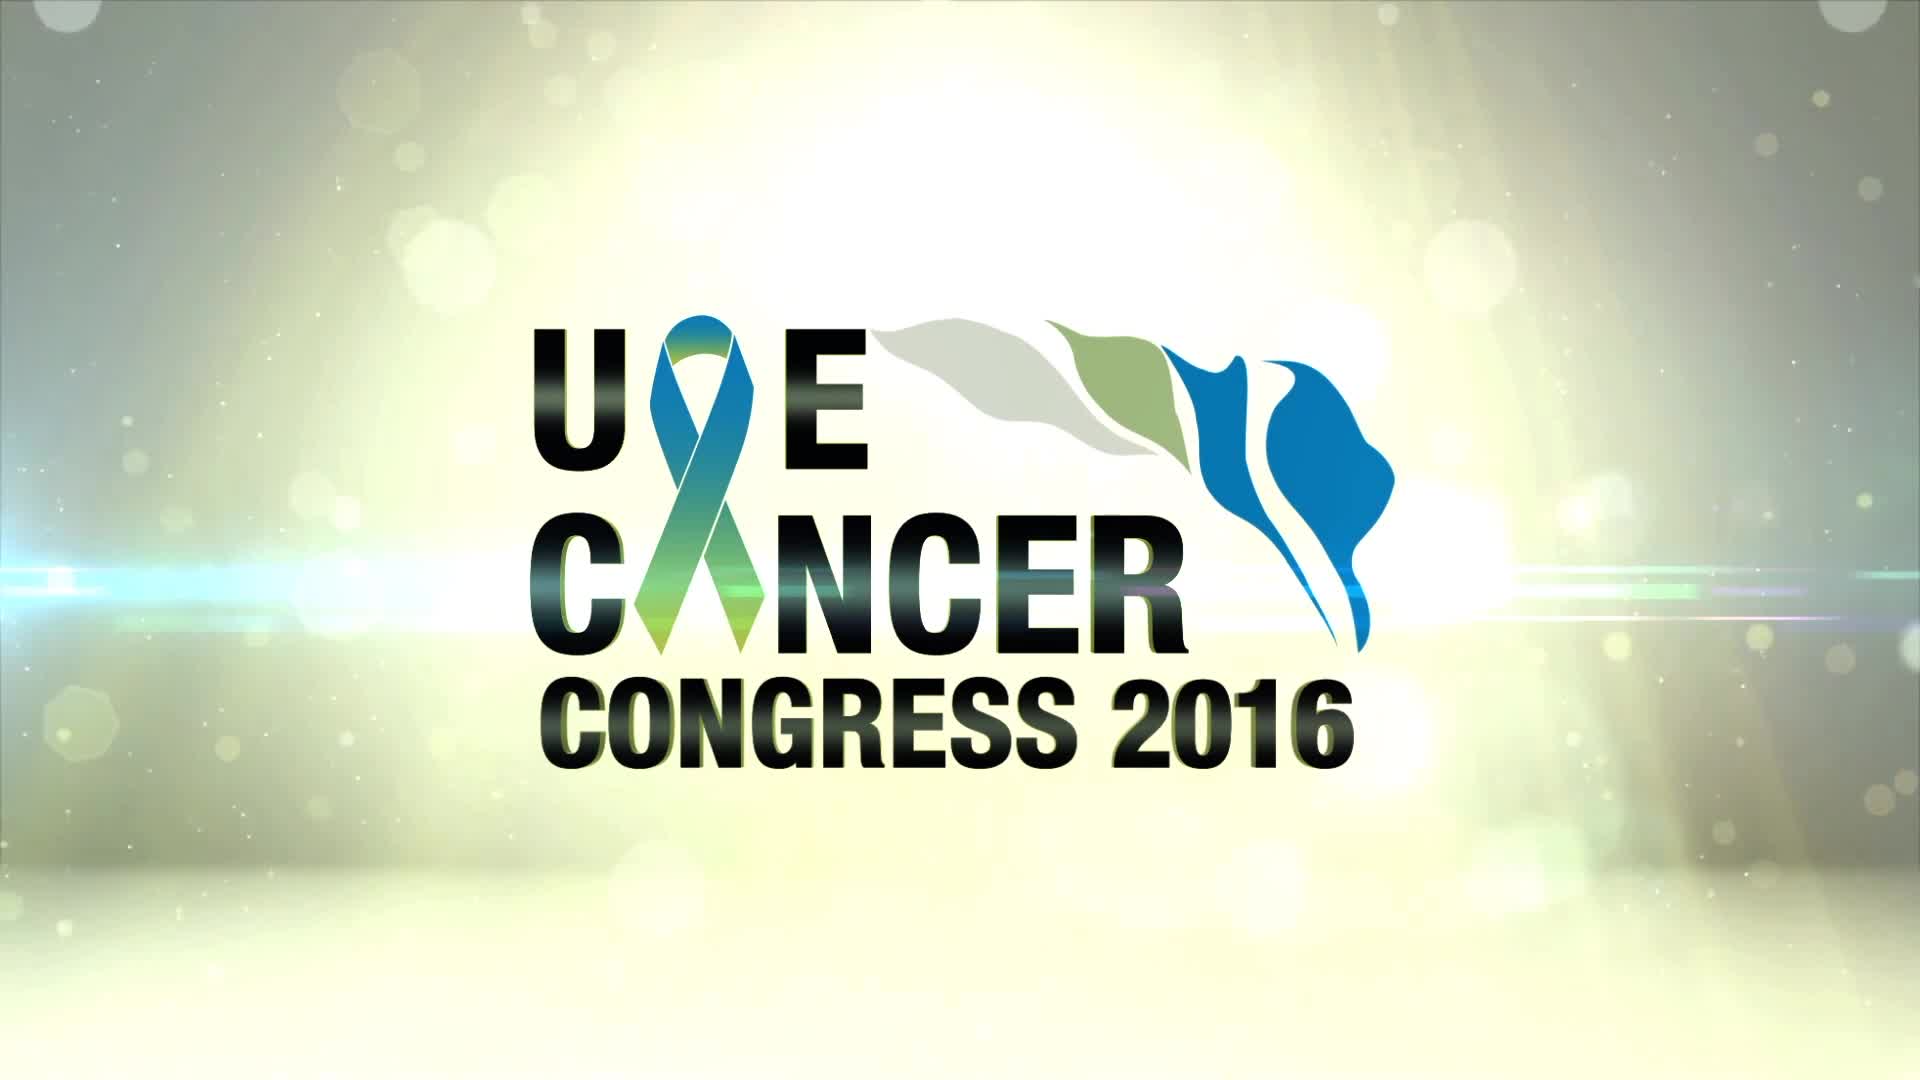 UAE CANCER CONGRESS 2016